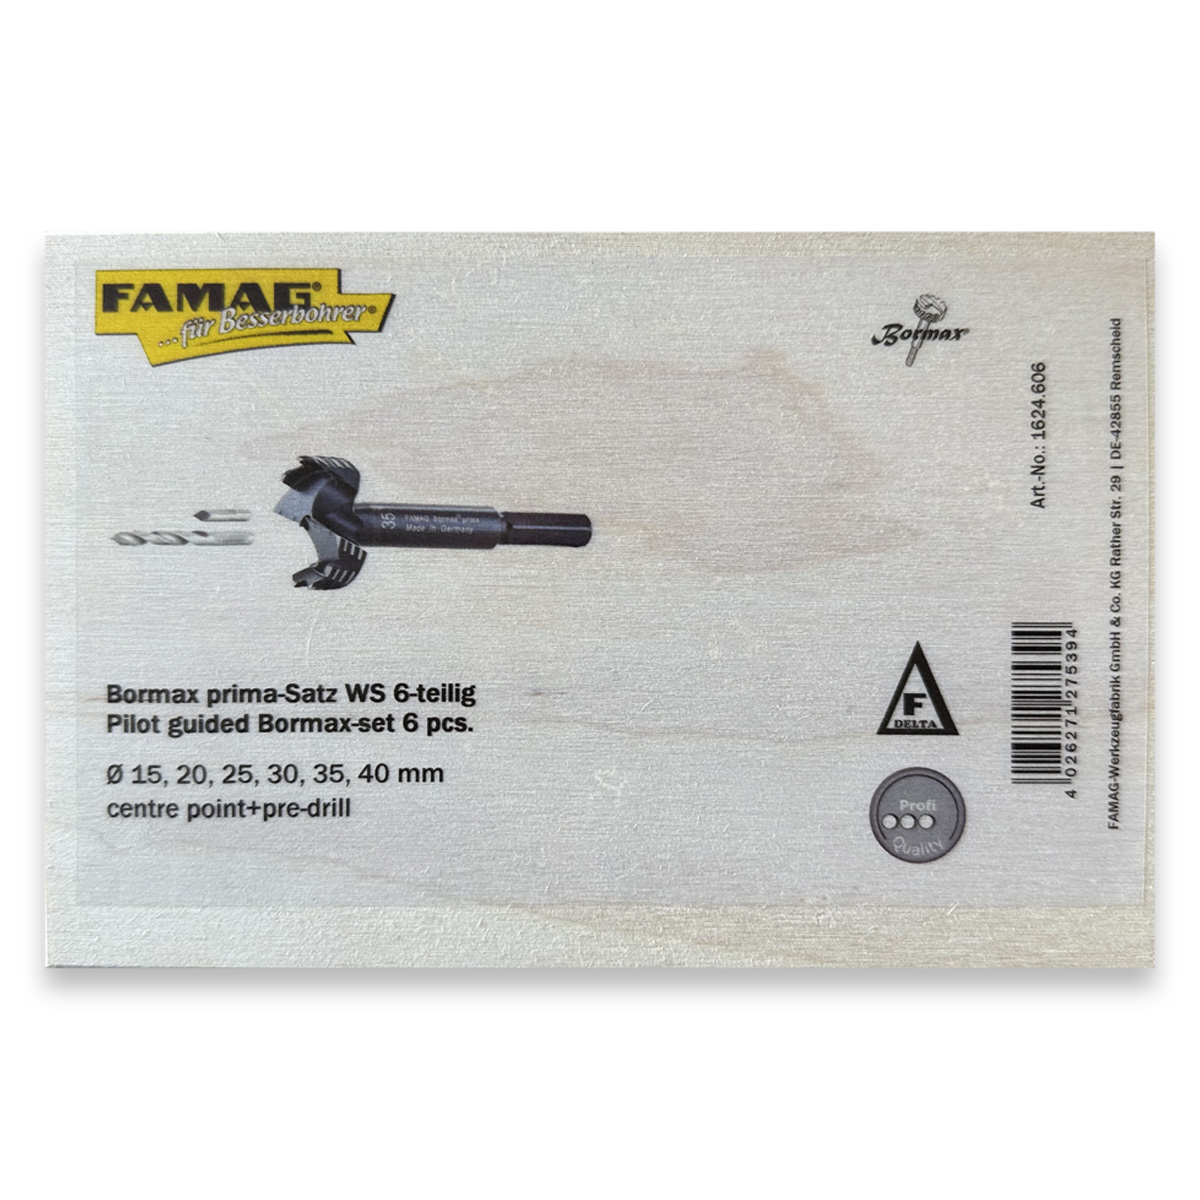 FAMAG Bormax WS prima Profi Set 15, 20, 25, 30, 35, 40 mm inkl. Zentrierspitze und Vorbohrer Ø 4 mm